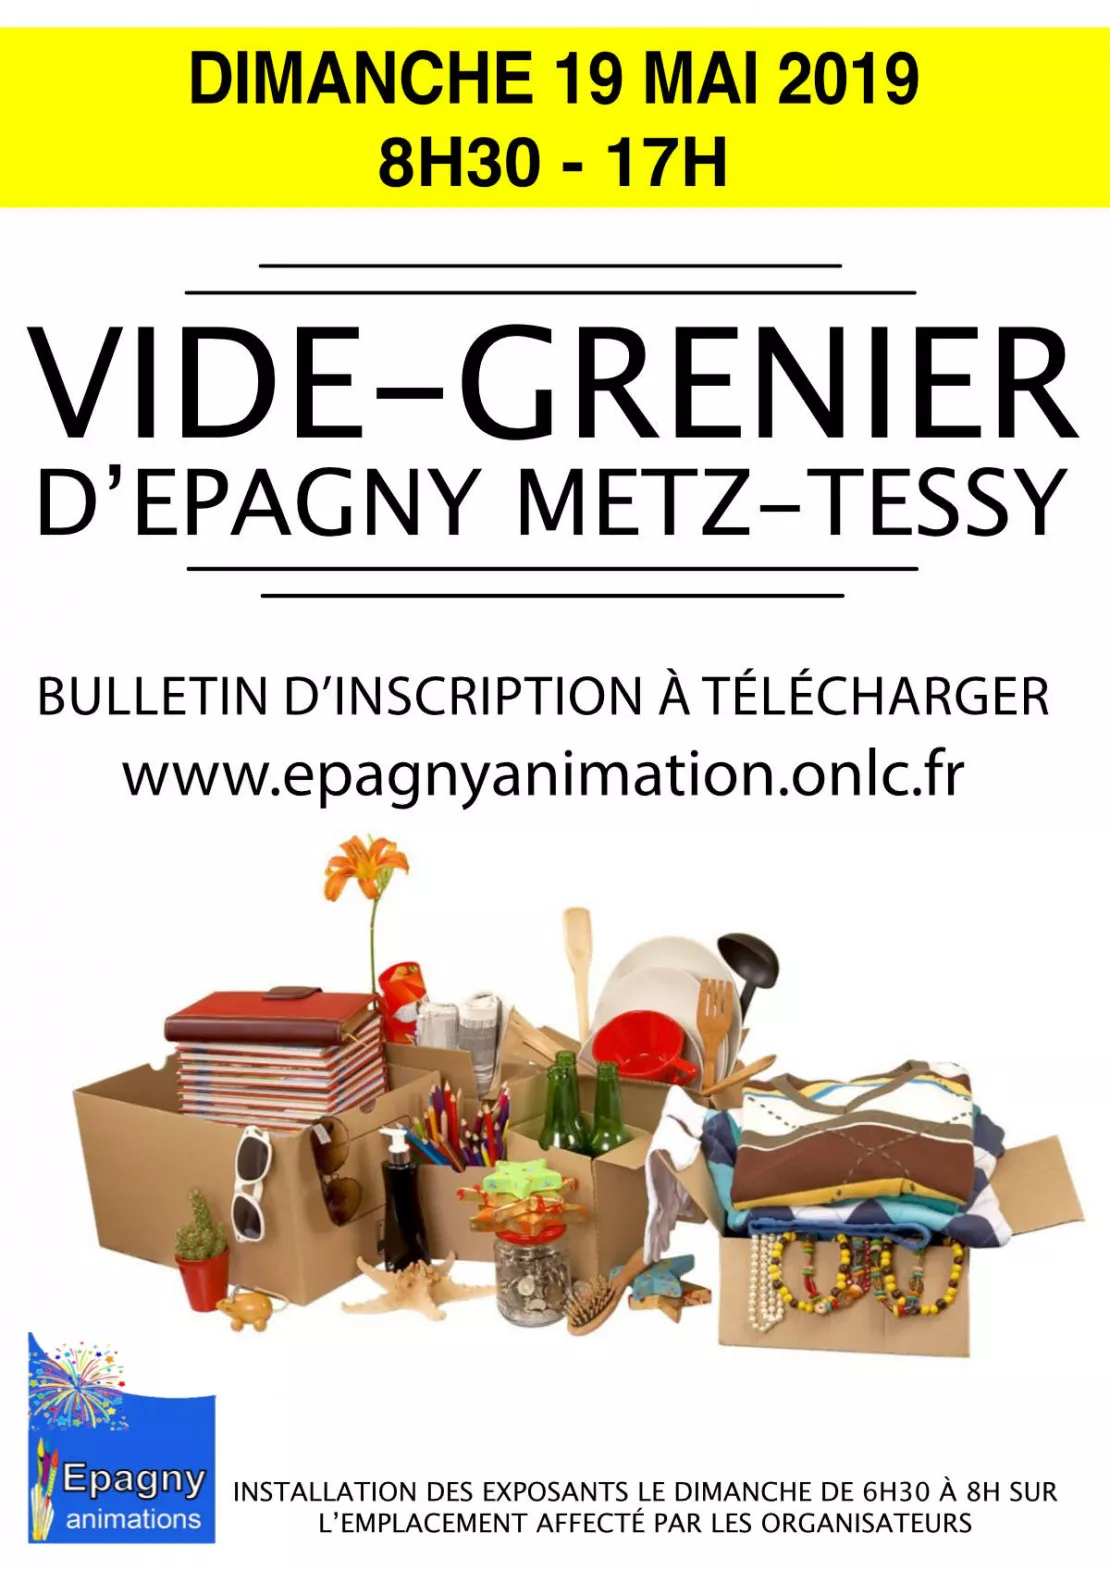 Vide grenier d'Epagny Metz-Tessy